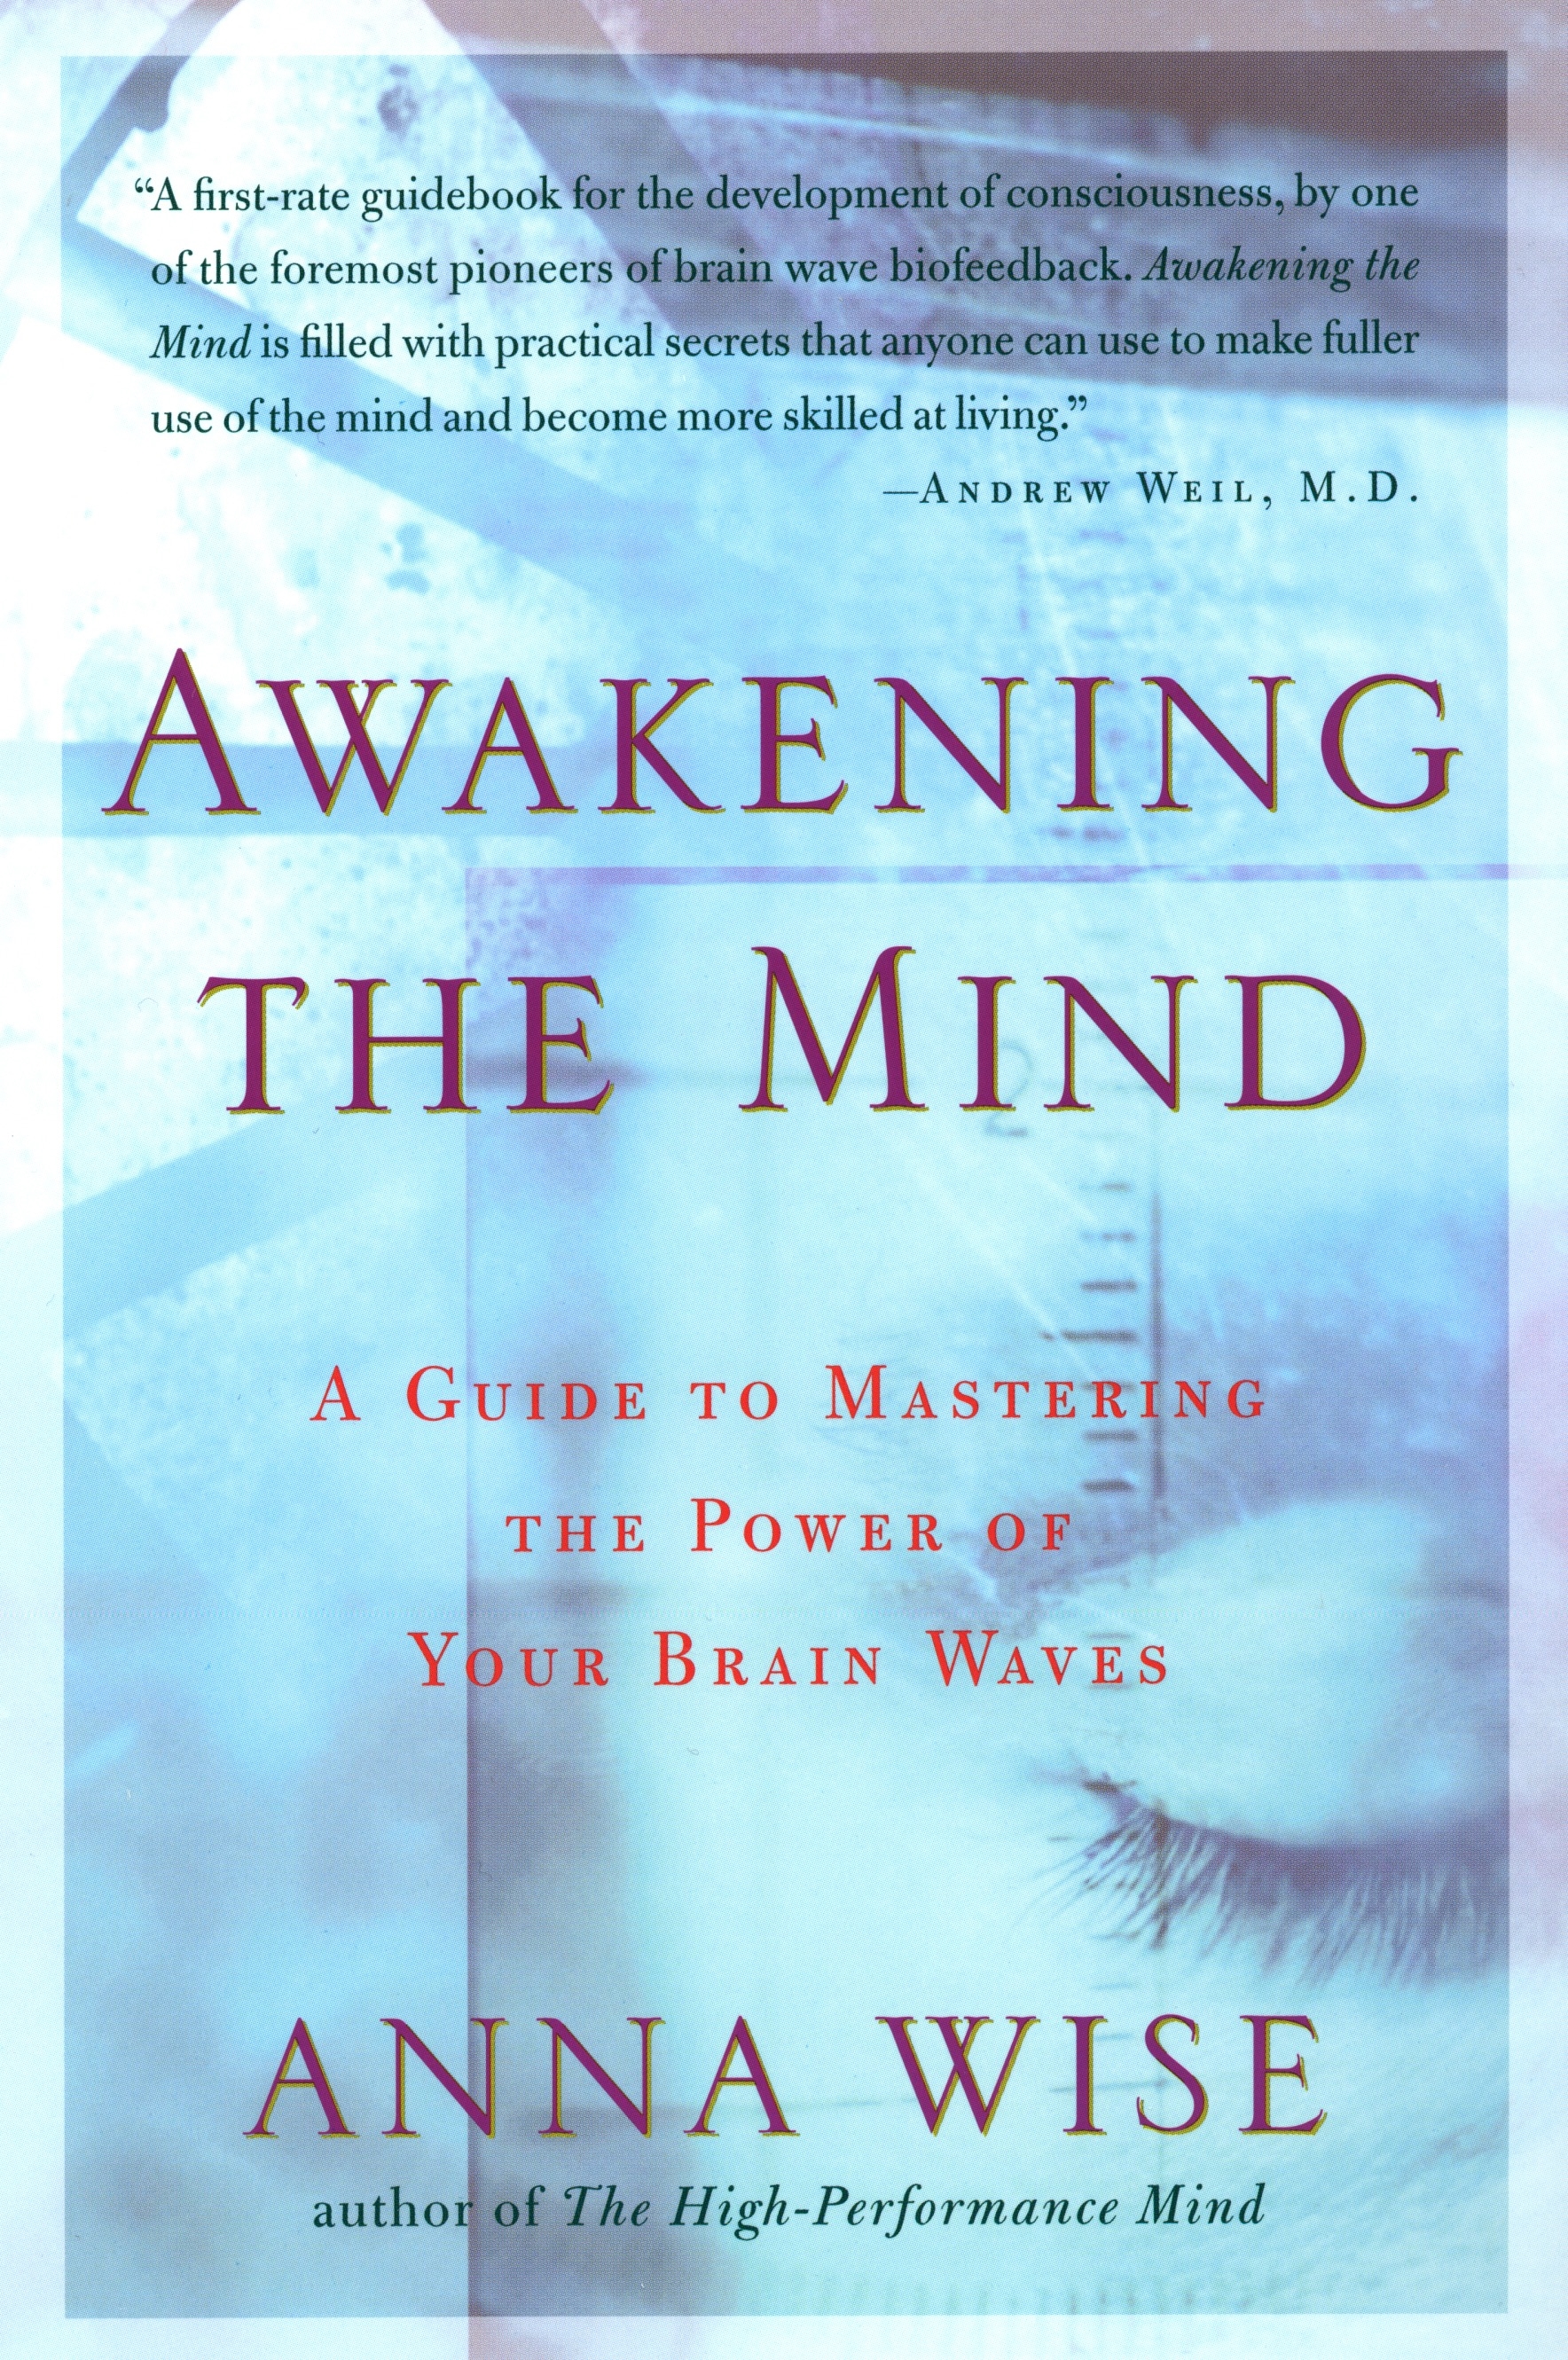 anna wise awakening the mind